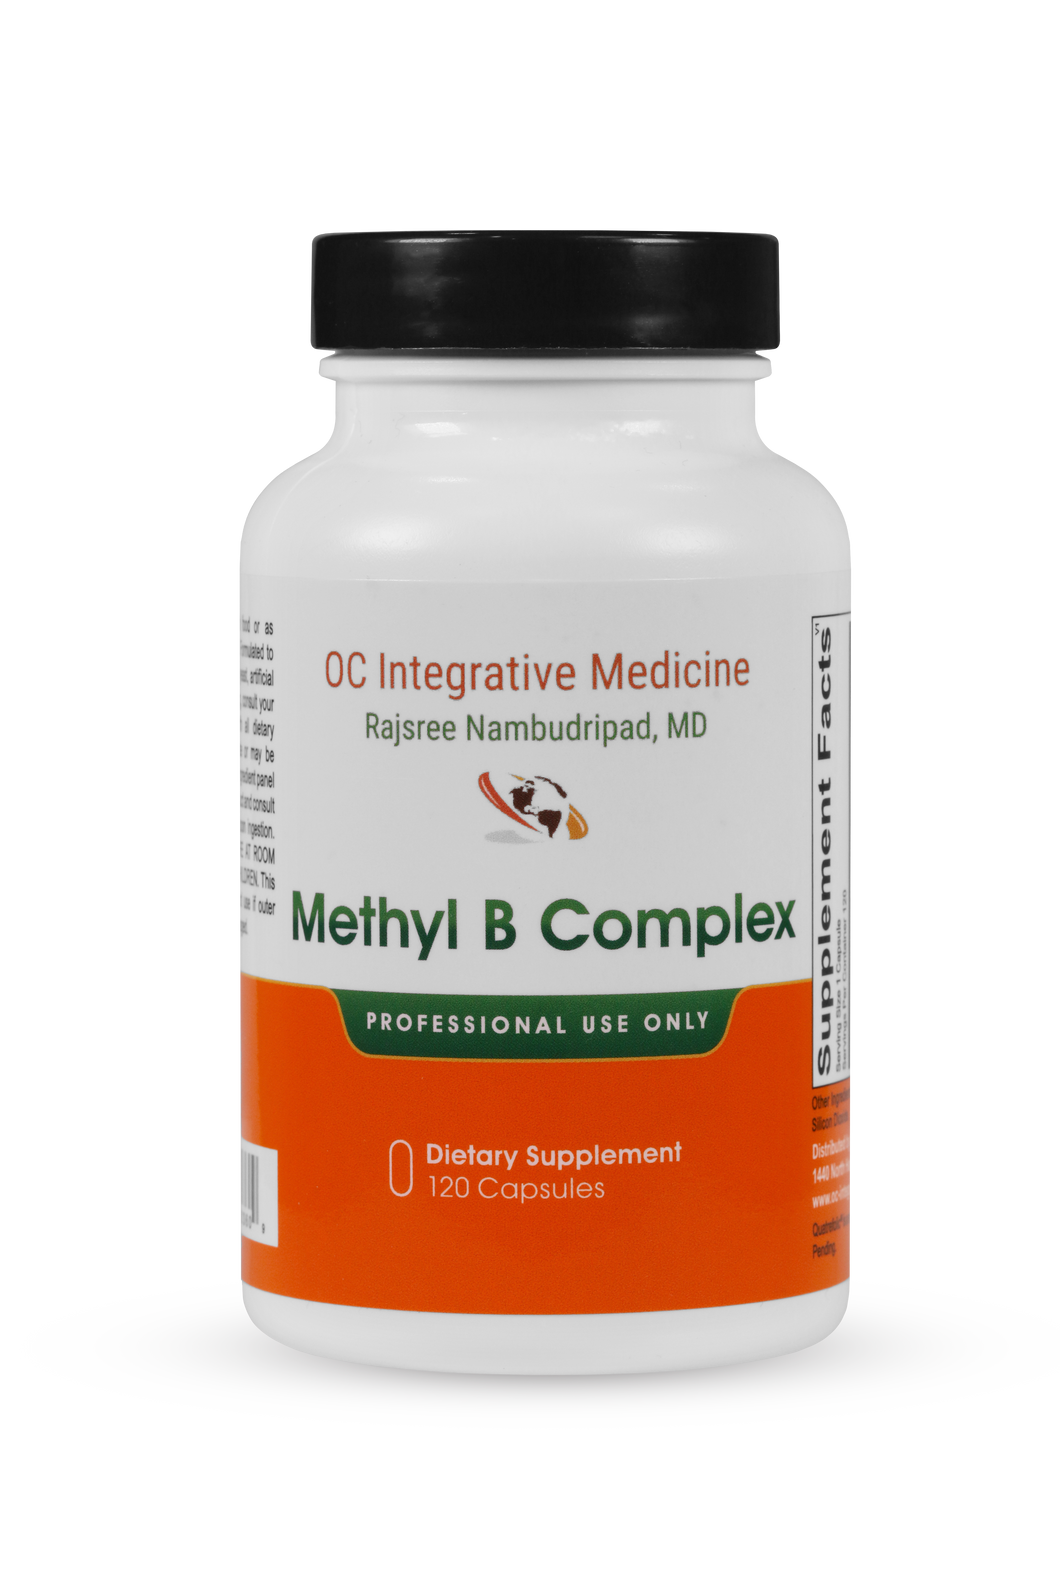 Methyl B Complex (Larger Bottle Size)